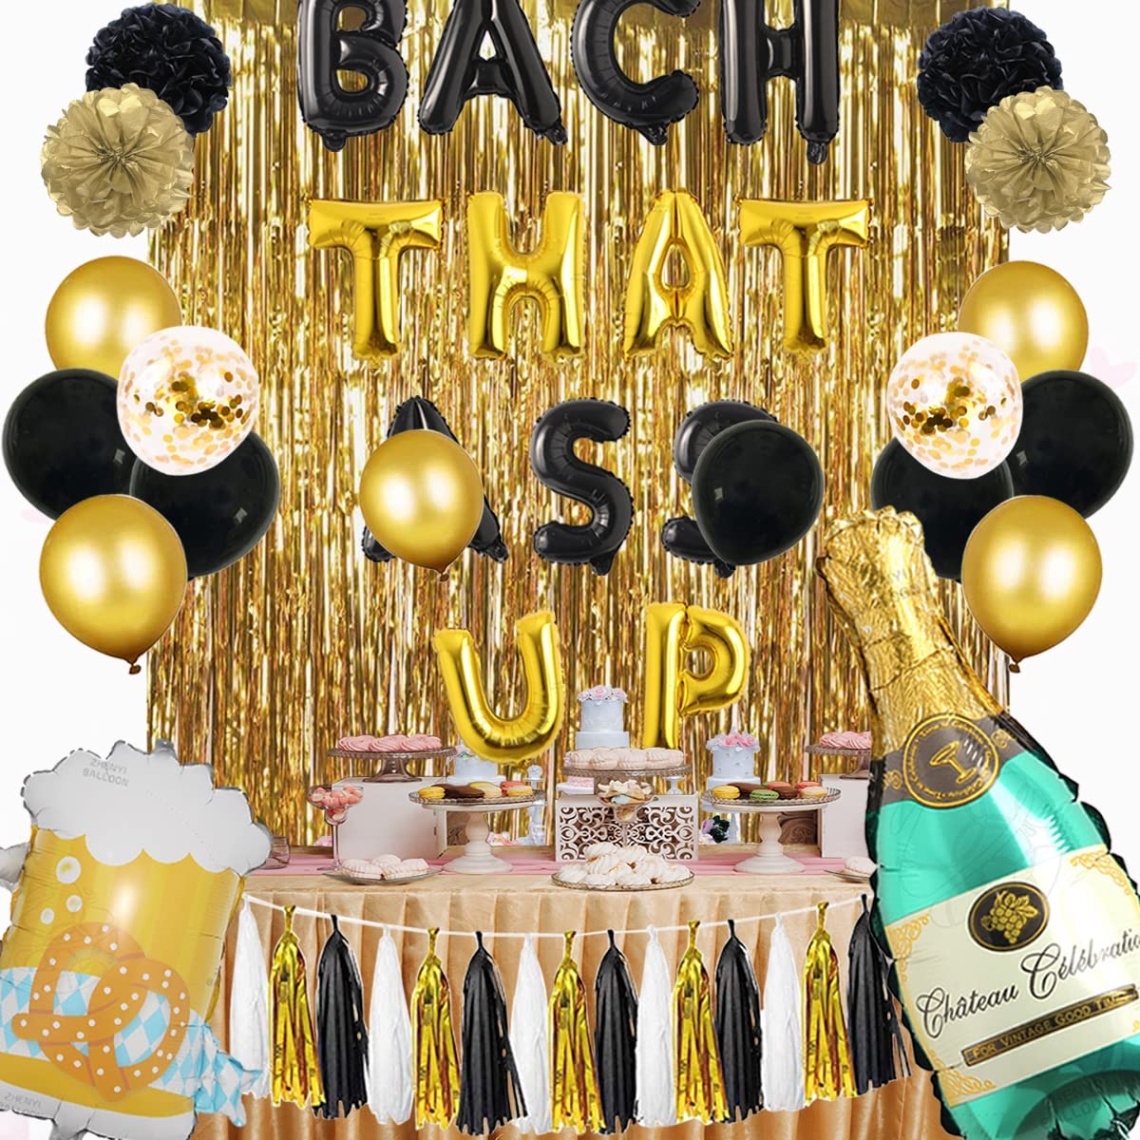 bachelorette party decorations near me Bulan 3 Bachelorette Party Decorations - Bach That Balloons Banner Sign Brunch  Bridal Shower for Gold and Black Nash Bachelorette Party Supplies